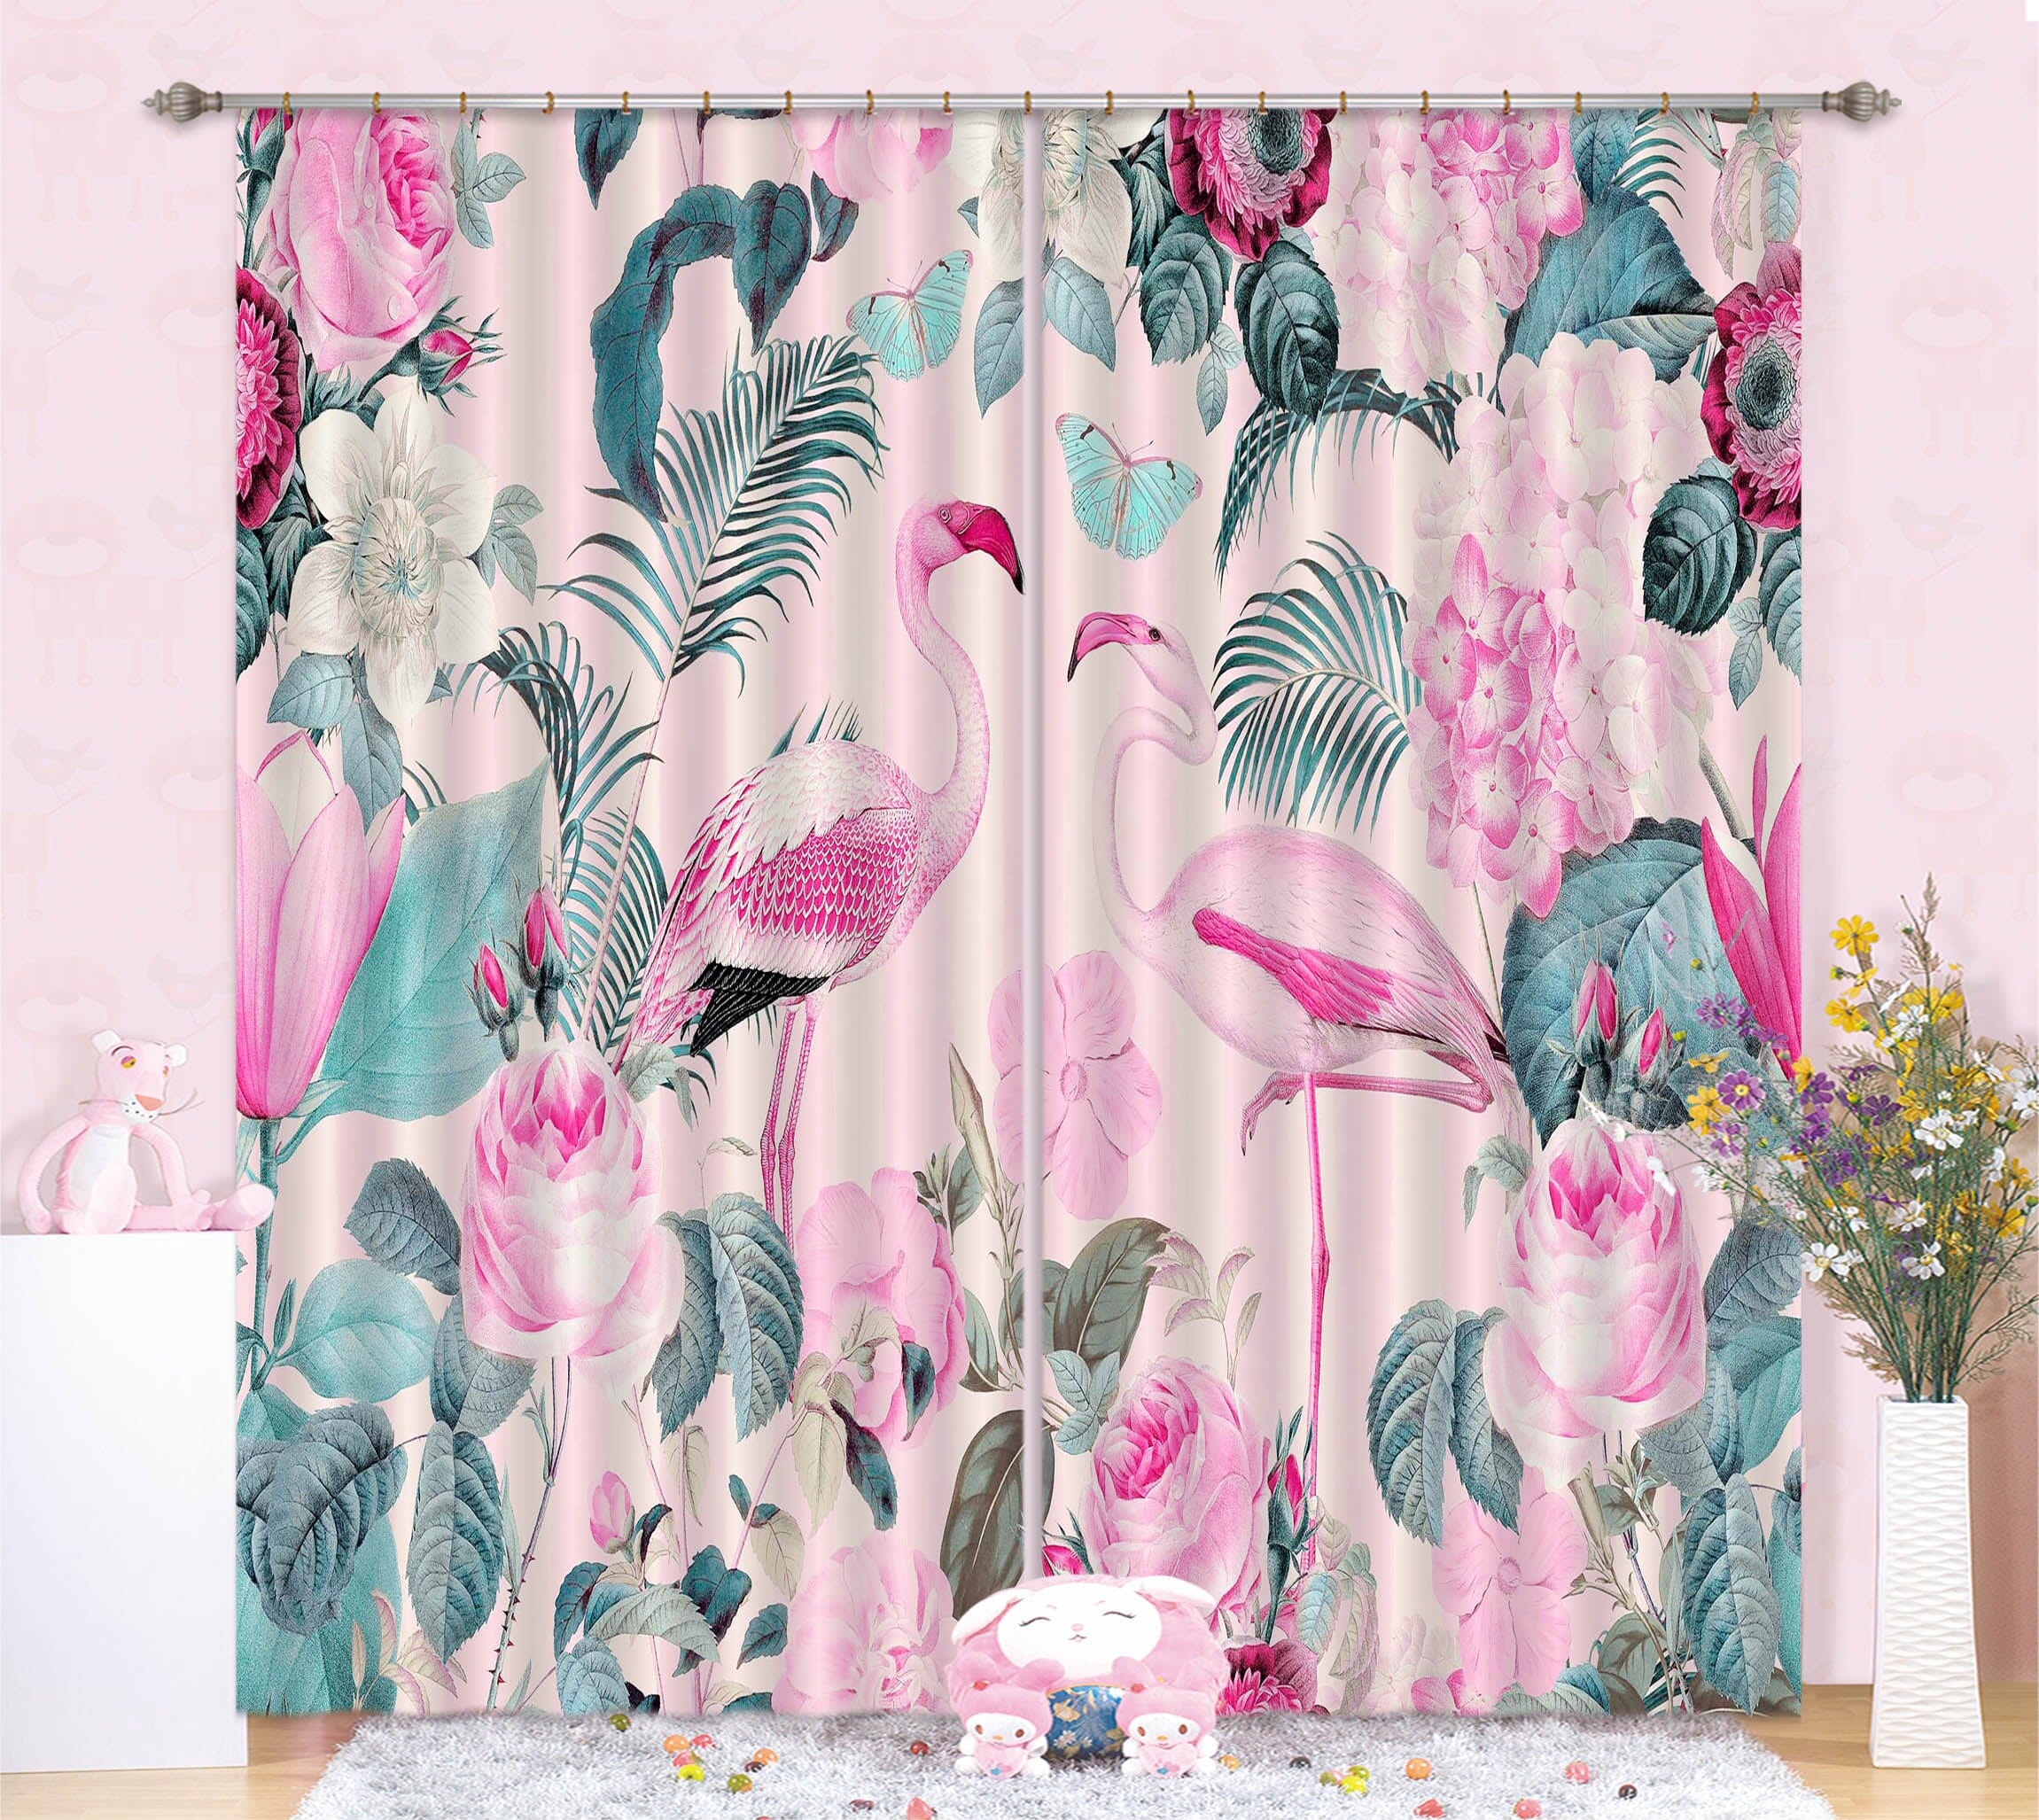 3D Flamingo Forest 056 Andrea haase Curtain Curtains Drapes Curtains AJ Creativity Home 